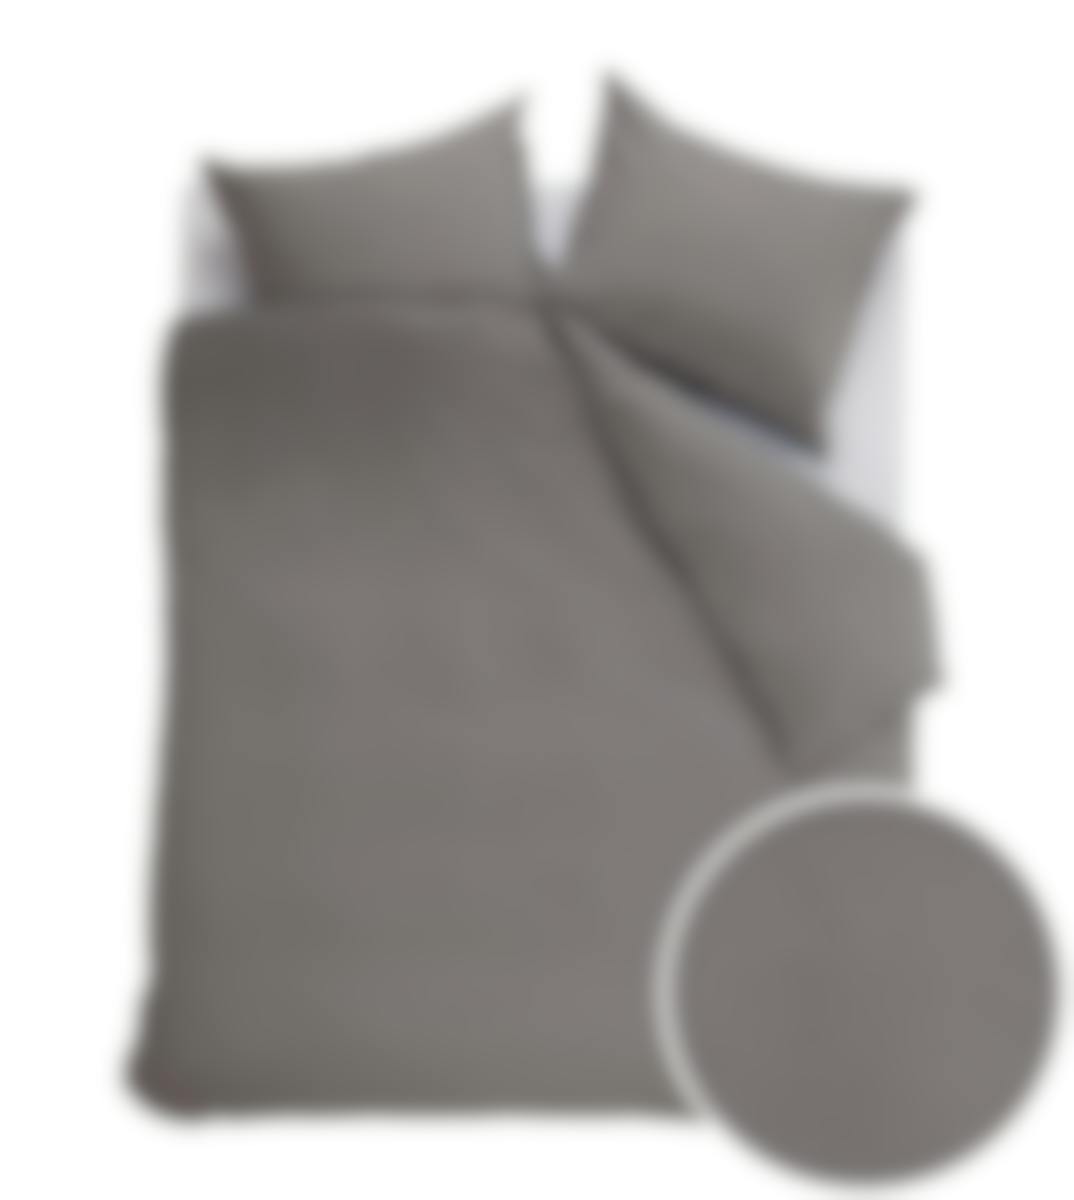 Ambiante dekbedovertrek Cotton Uni Grey Katoen 200 x 200-220 cm